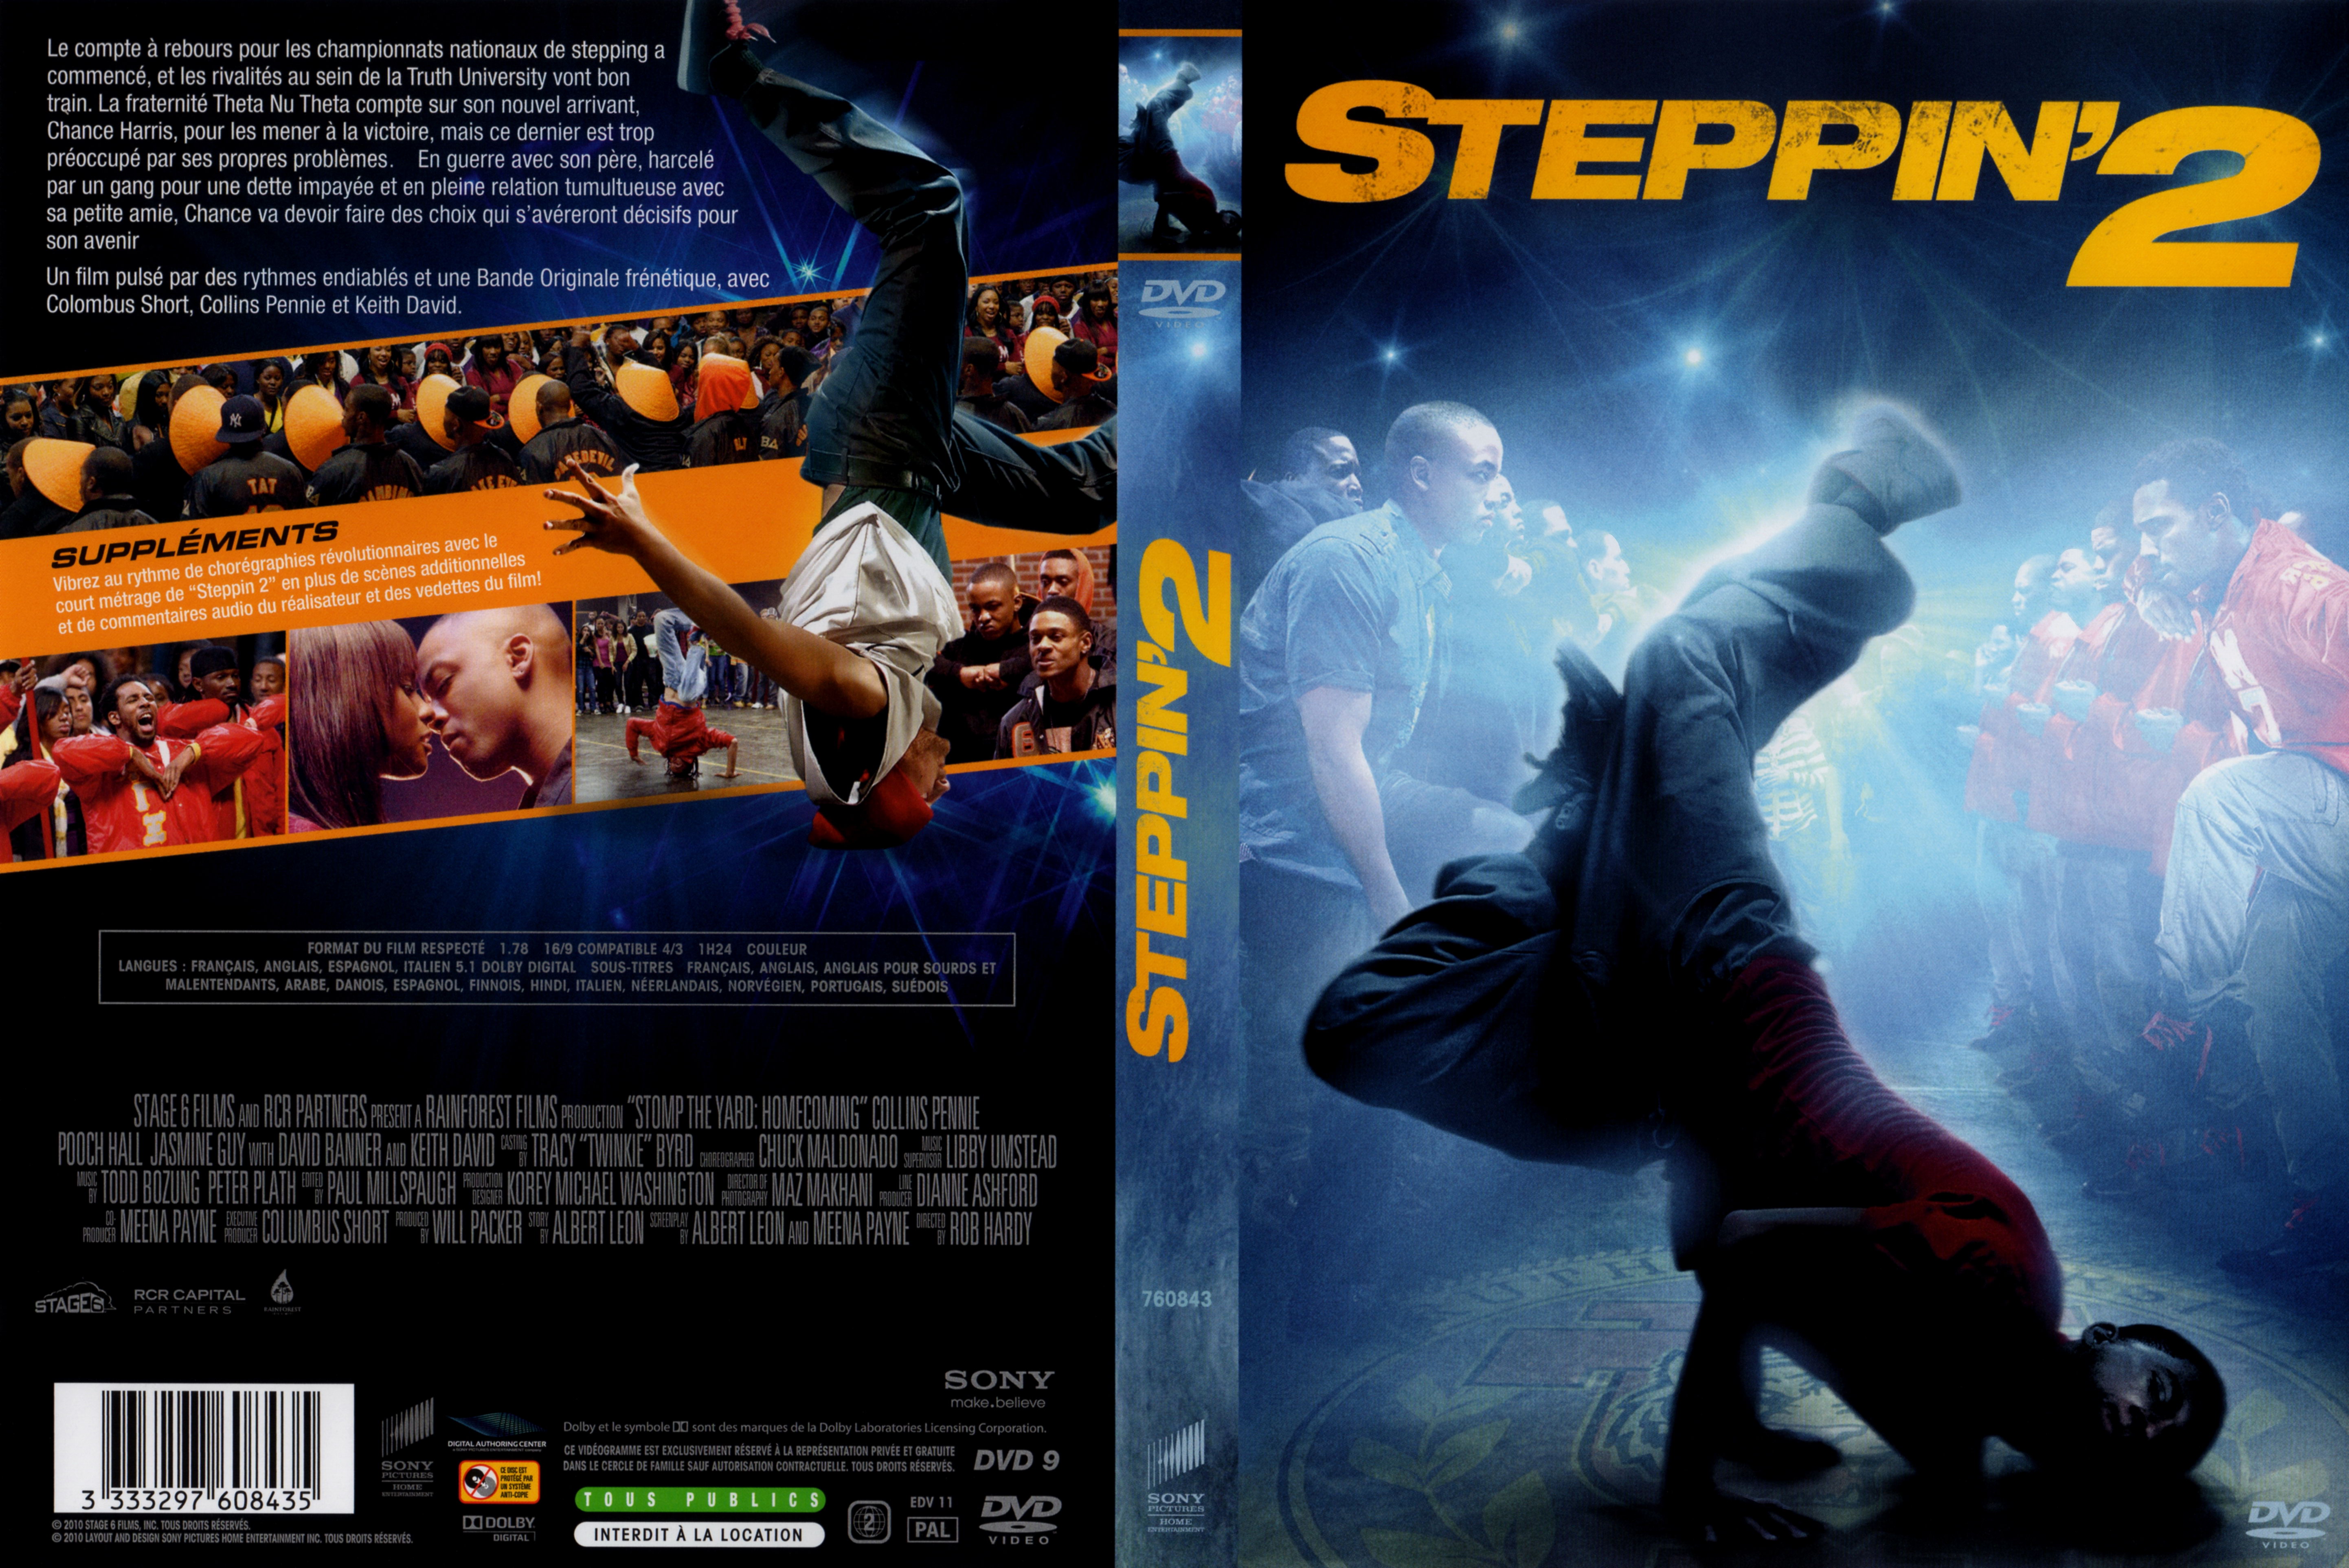 Jaquette DVD Steppin 2